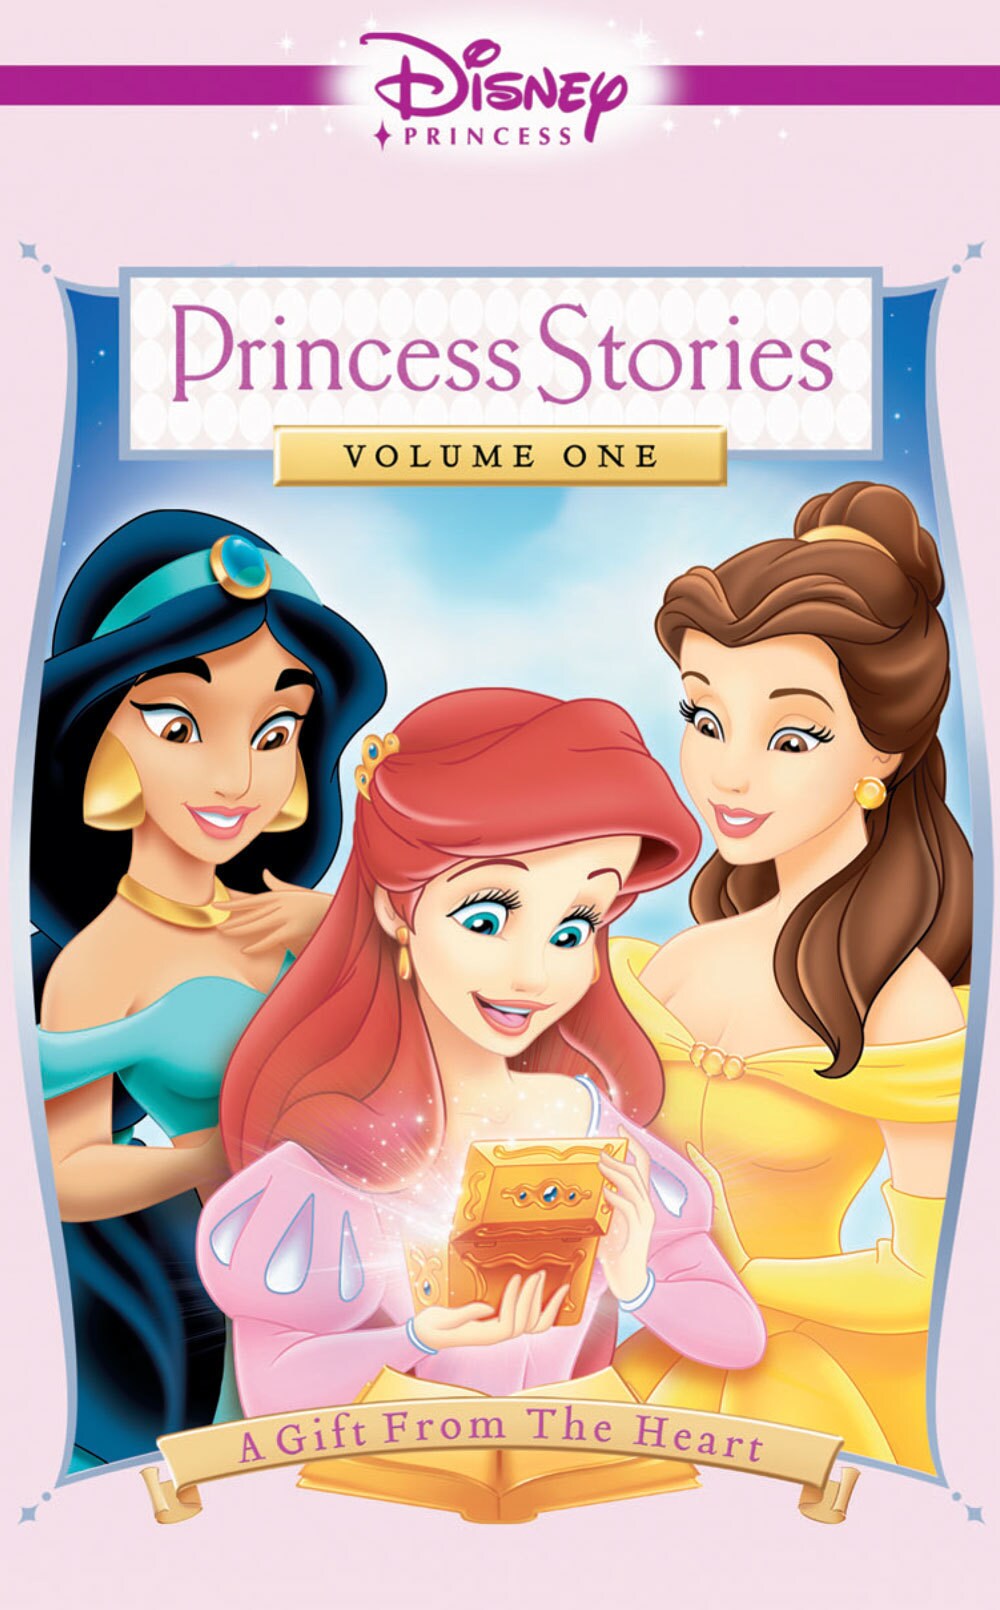 Disney Princess Stories Volume 1 Full Movie Online - Story Guest